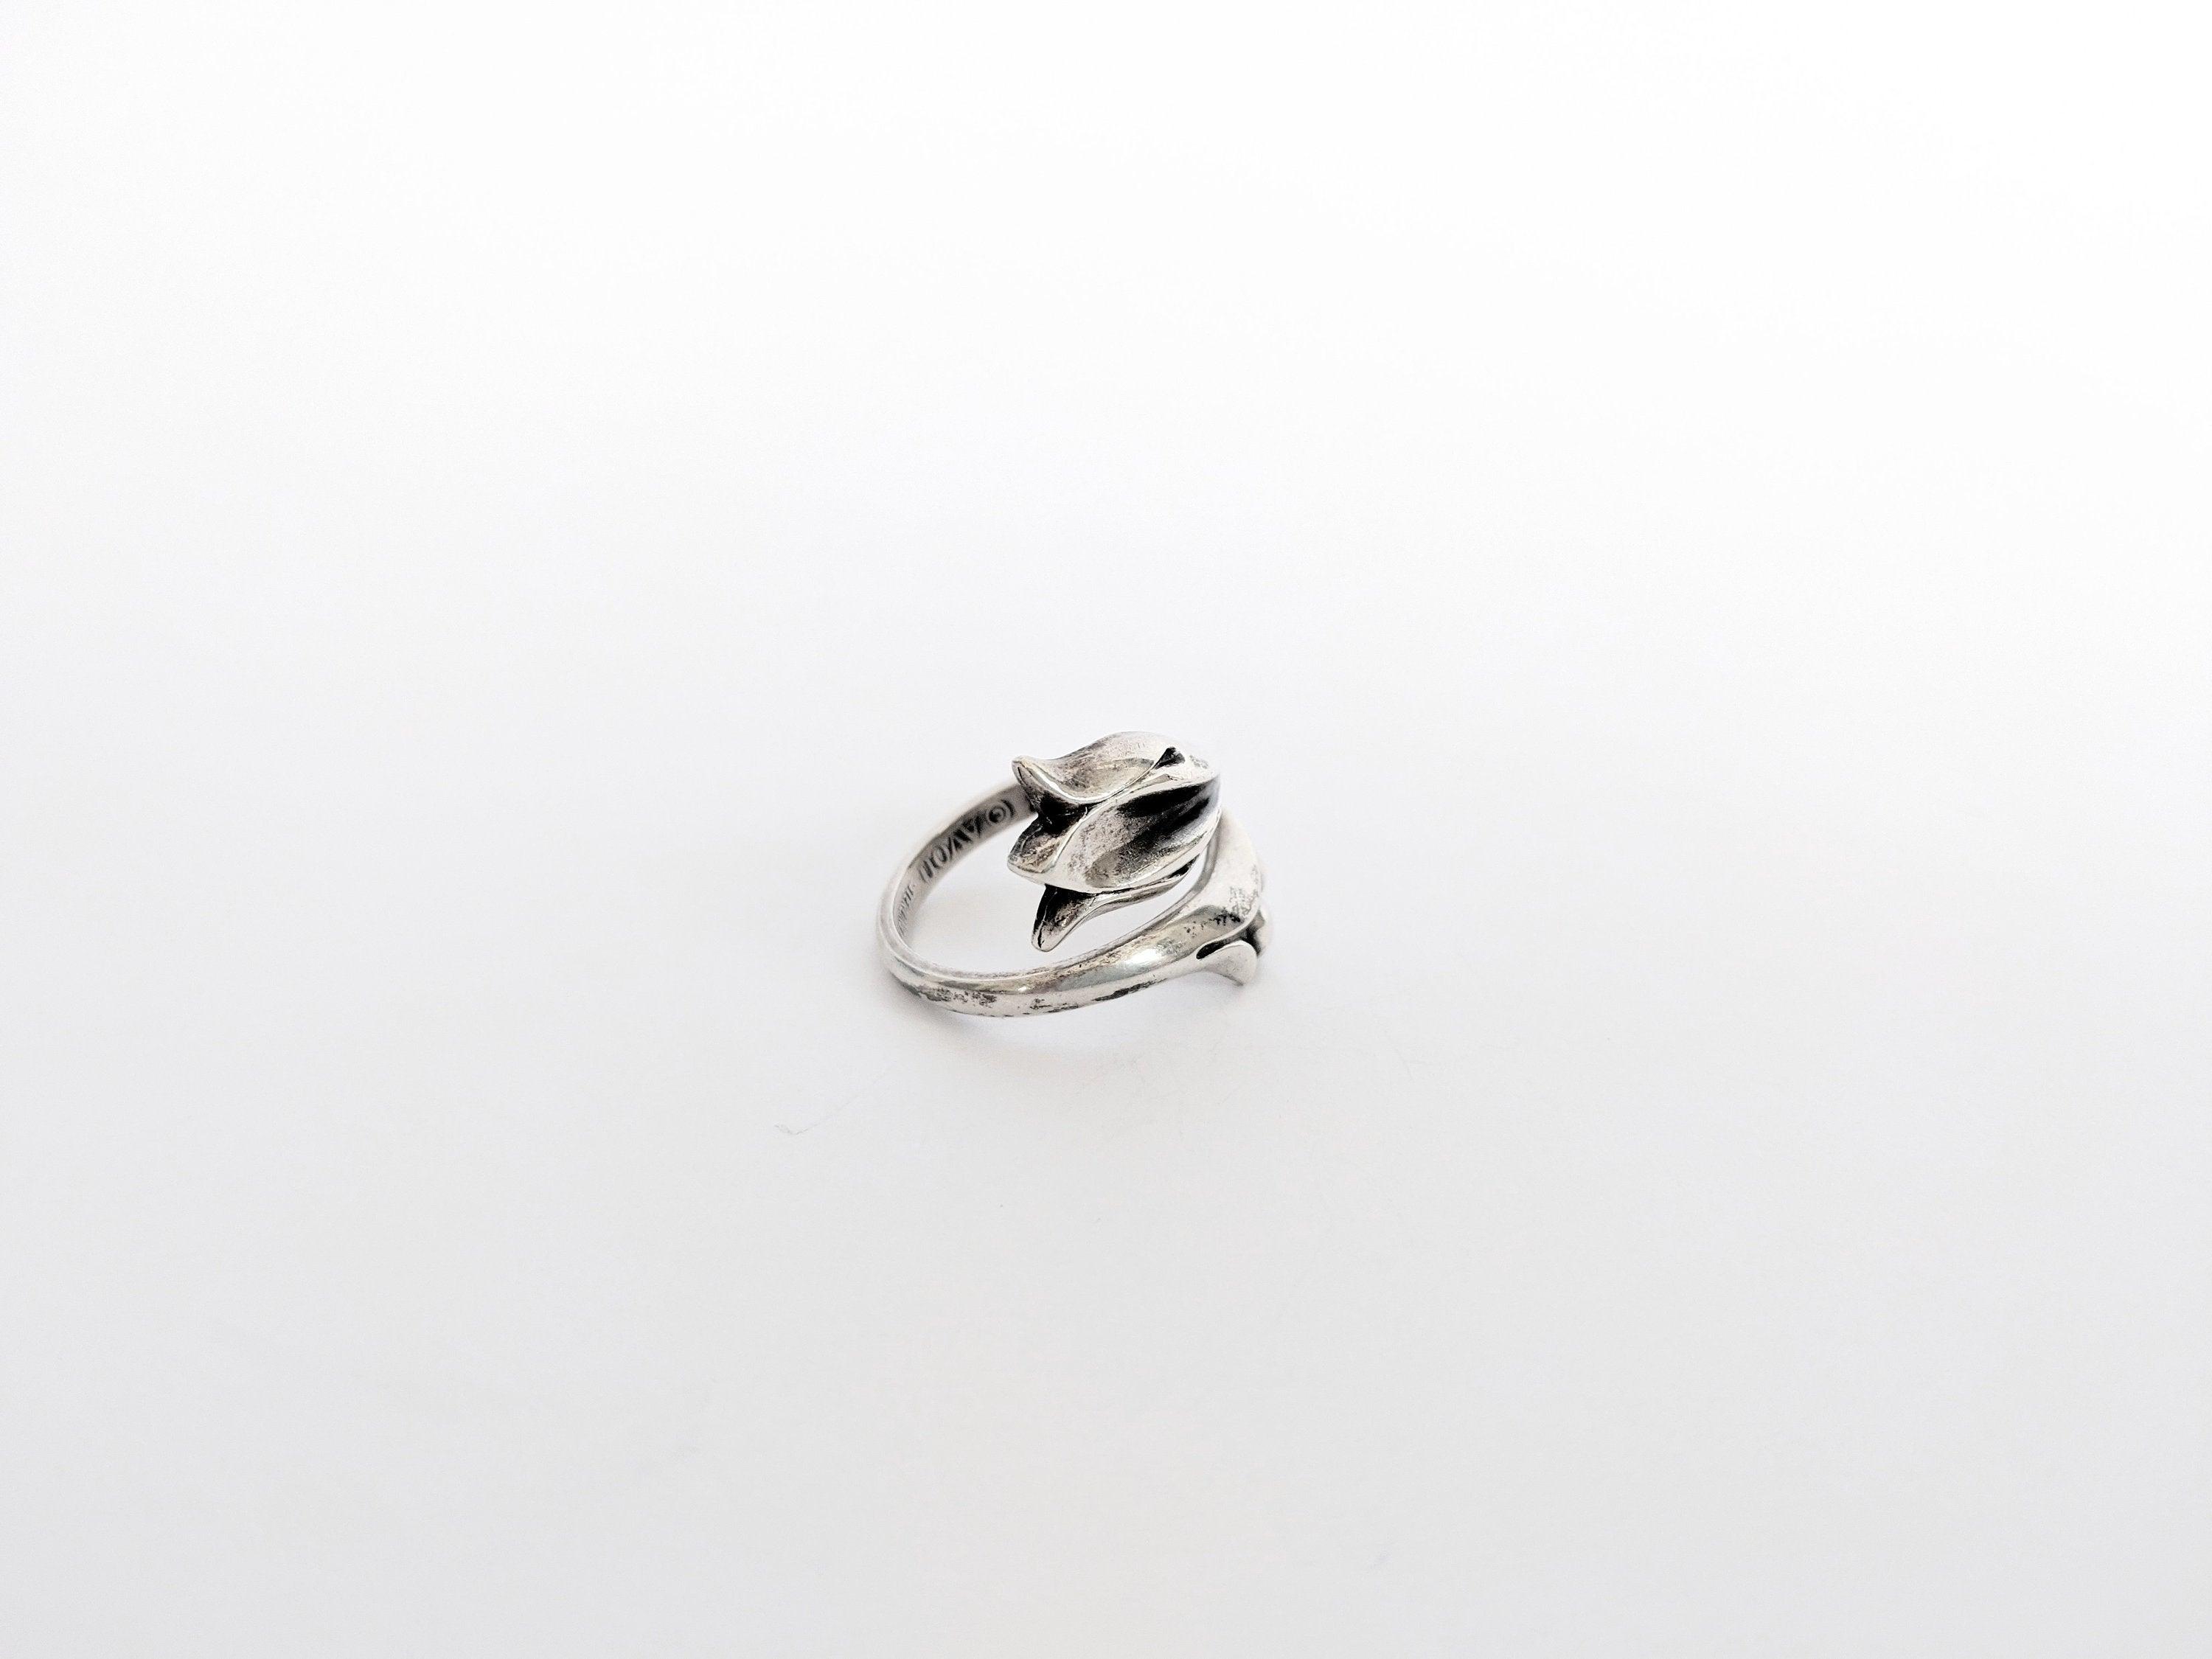 Avon Aquamarine Sterling Silver Ring Gemstone Fine Rings for sale | eBay